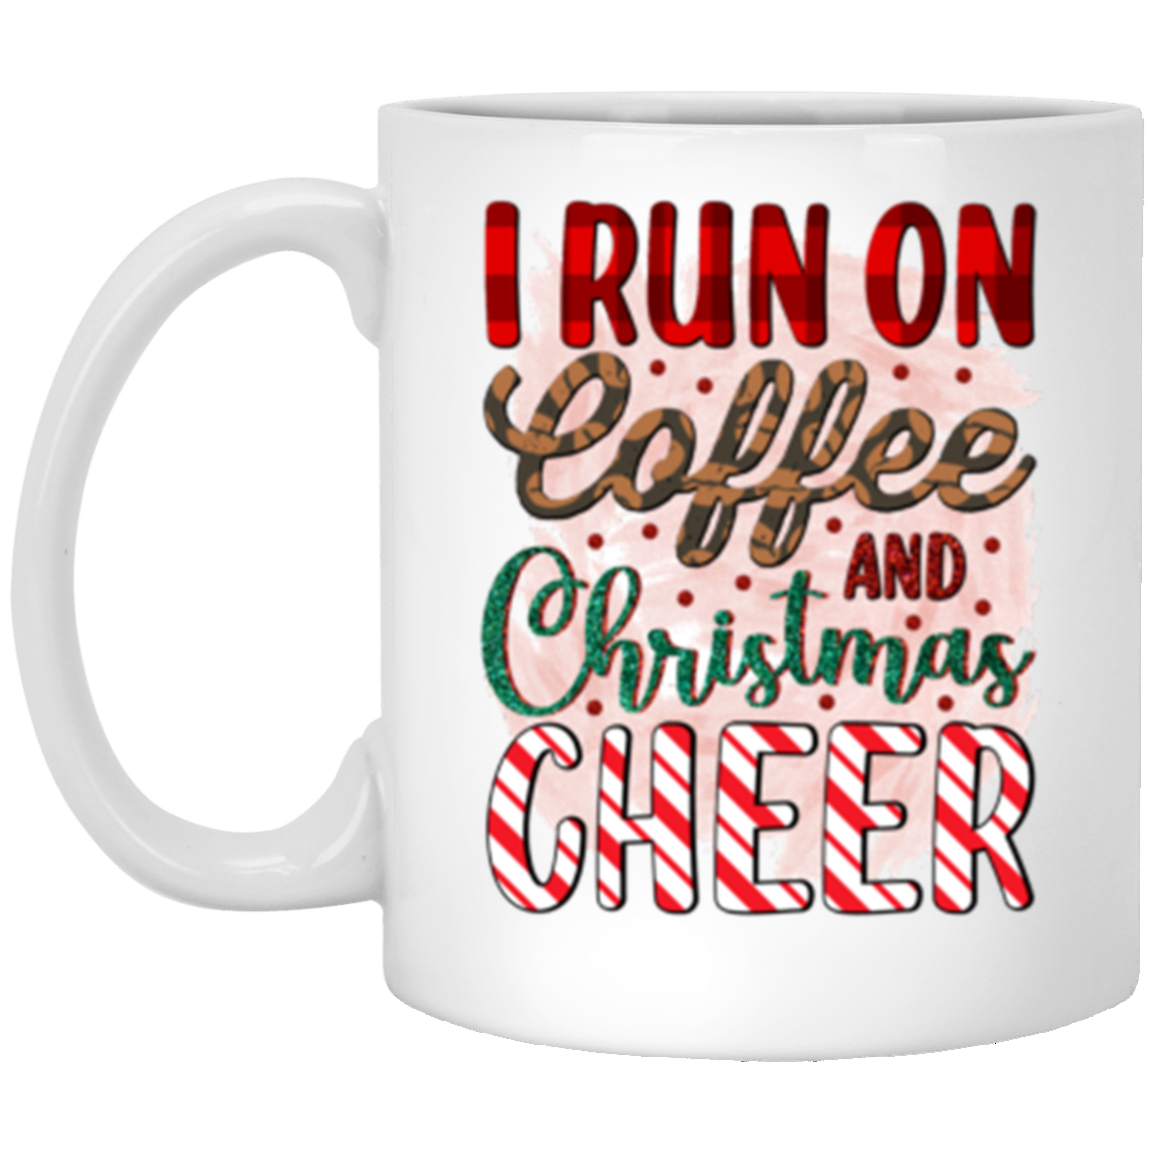 I Run On Coffee And Christmas Cheer, Full Wrap-Around - 11 & 15 oz. White Mug